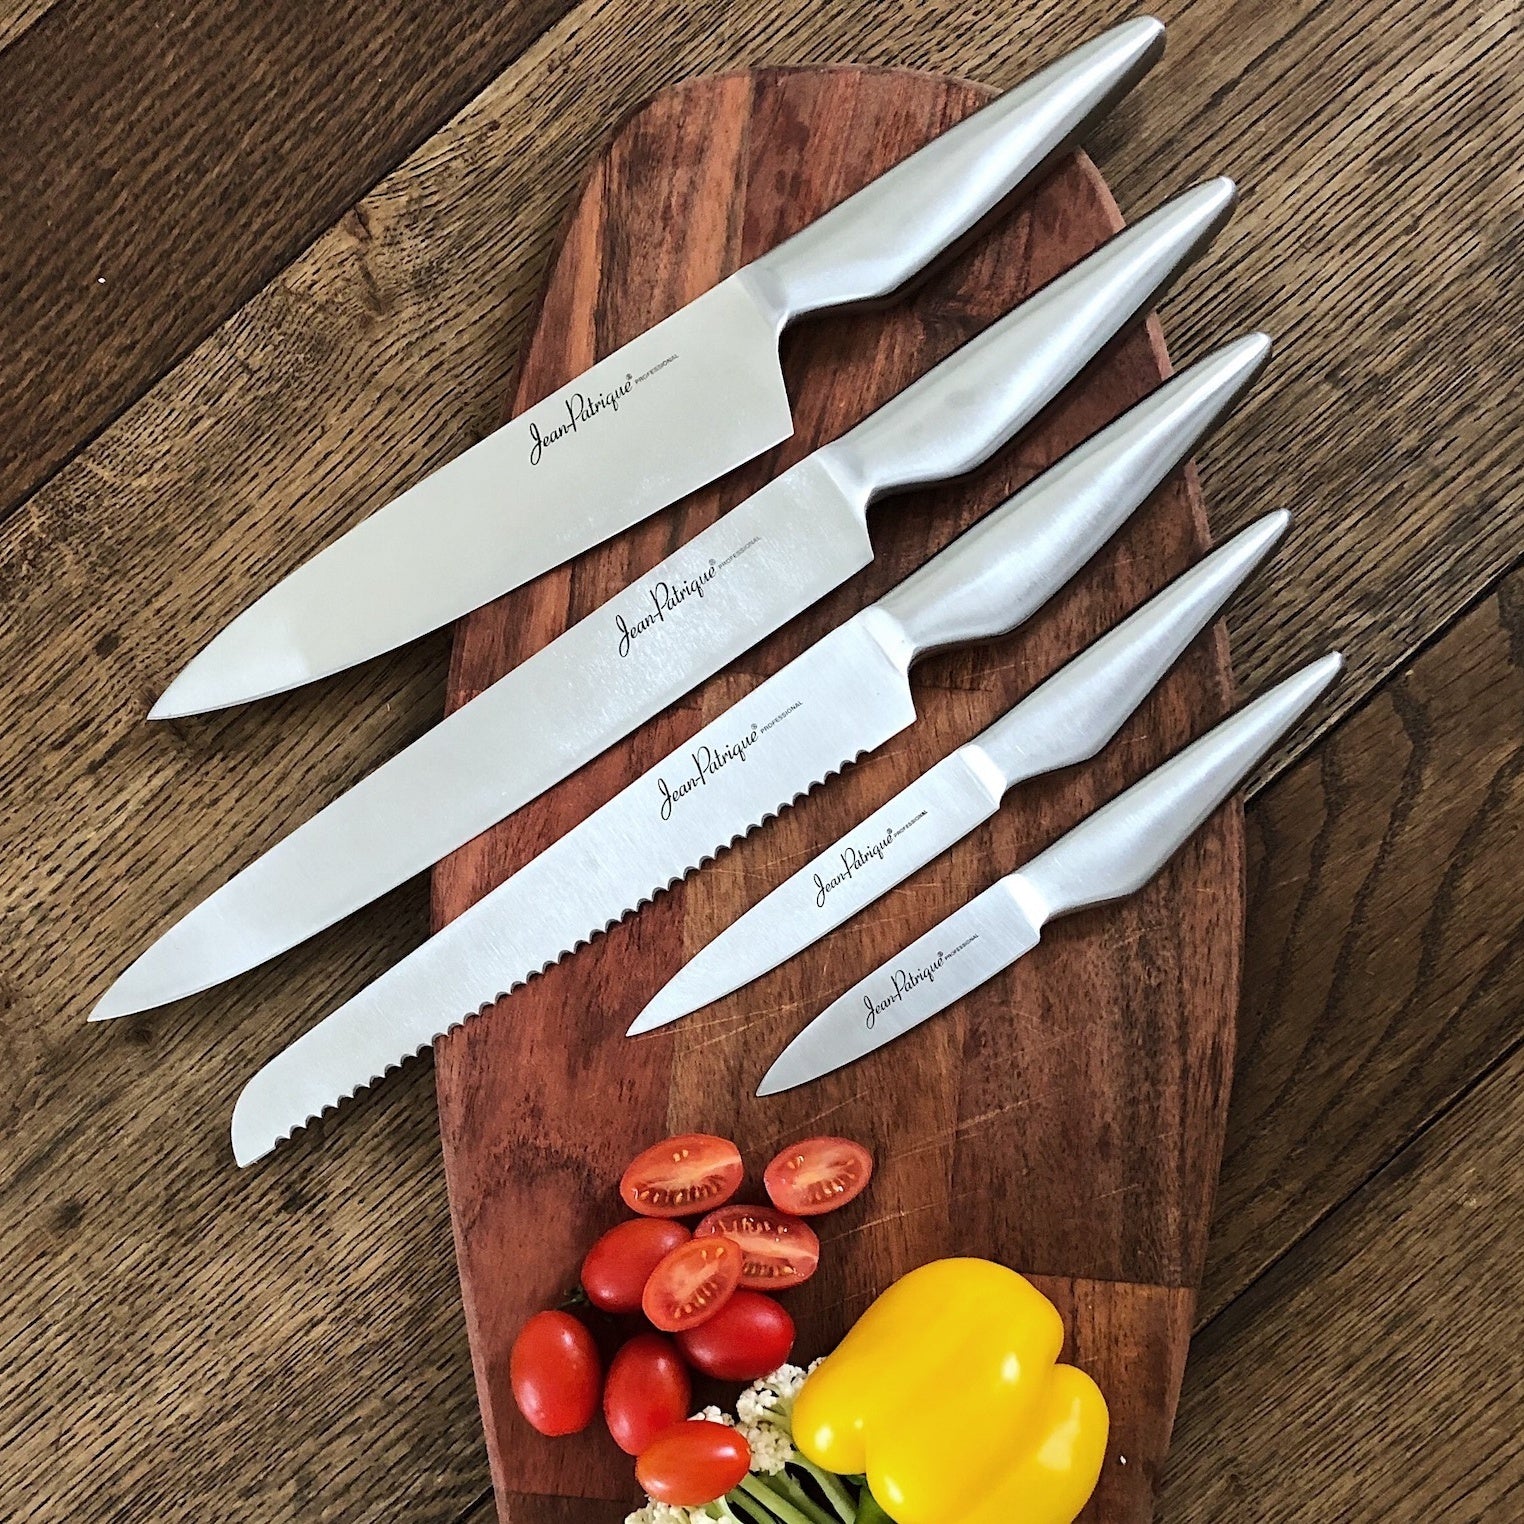 The Knife Set